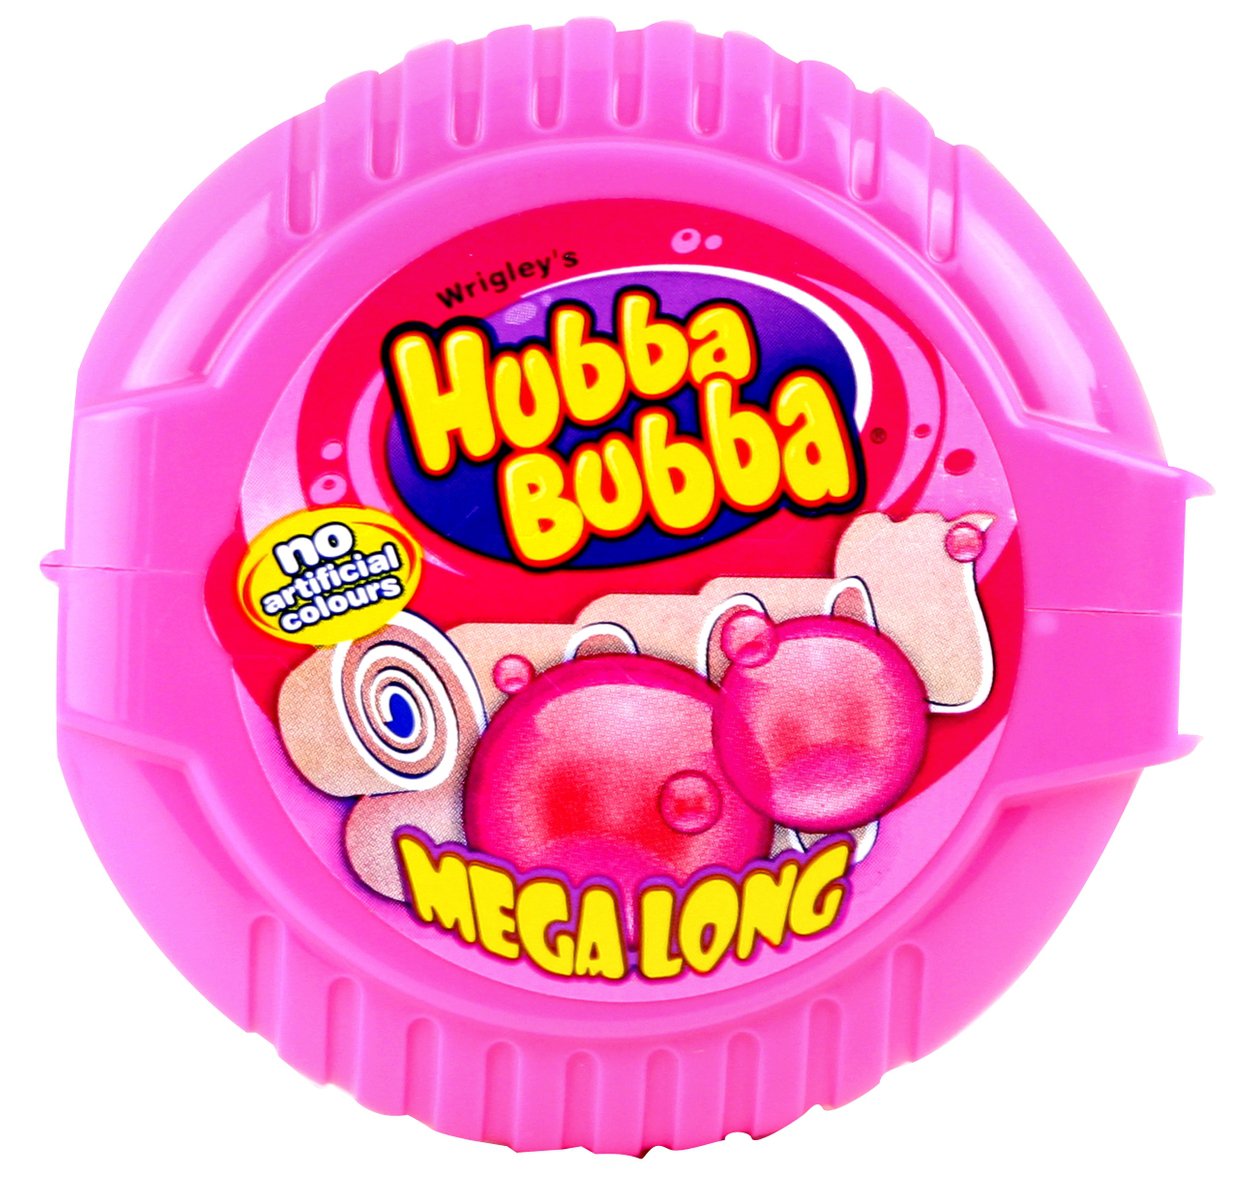 Kosher Wrigley's Hubba Bubba 3 packs 56gr. 